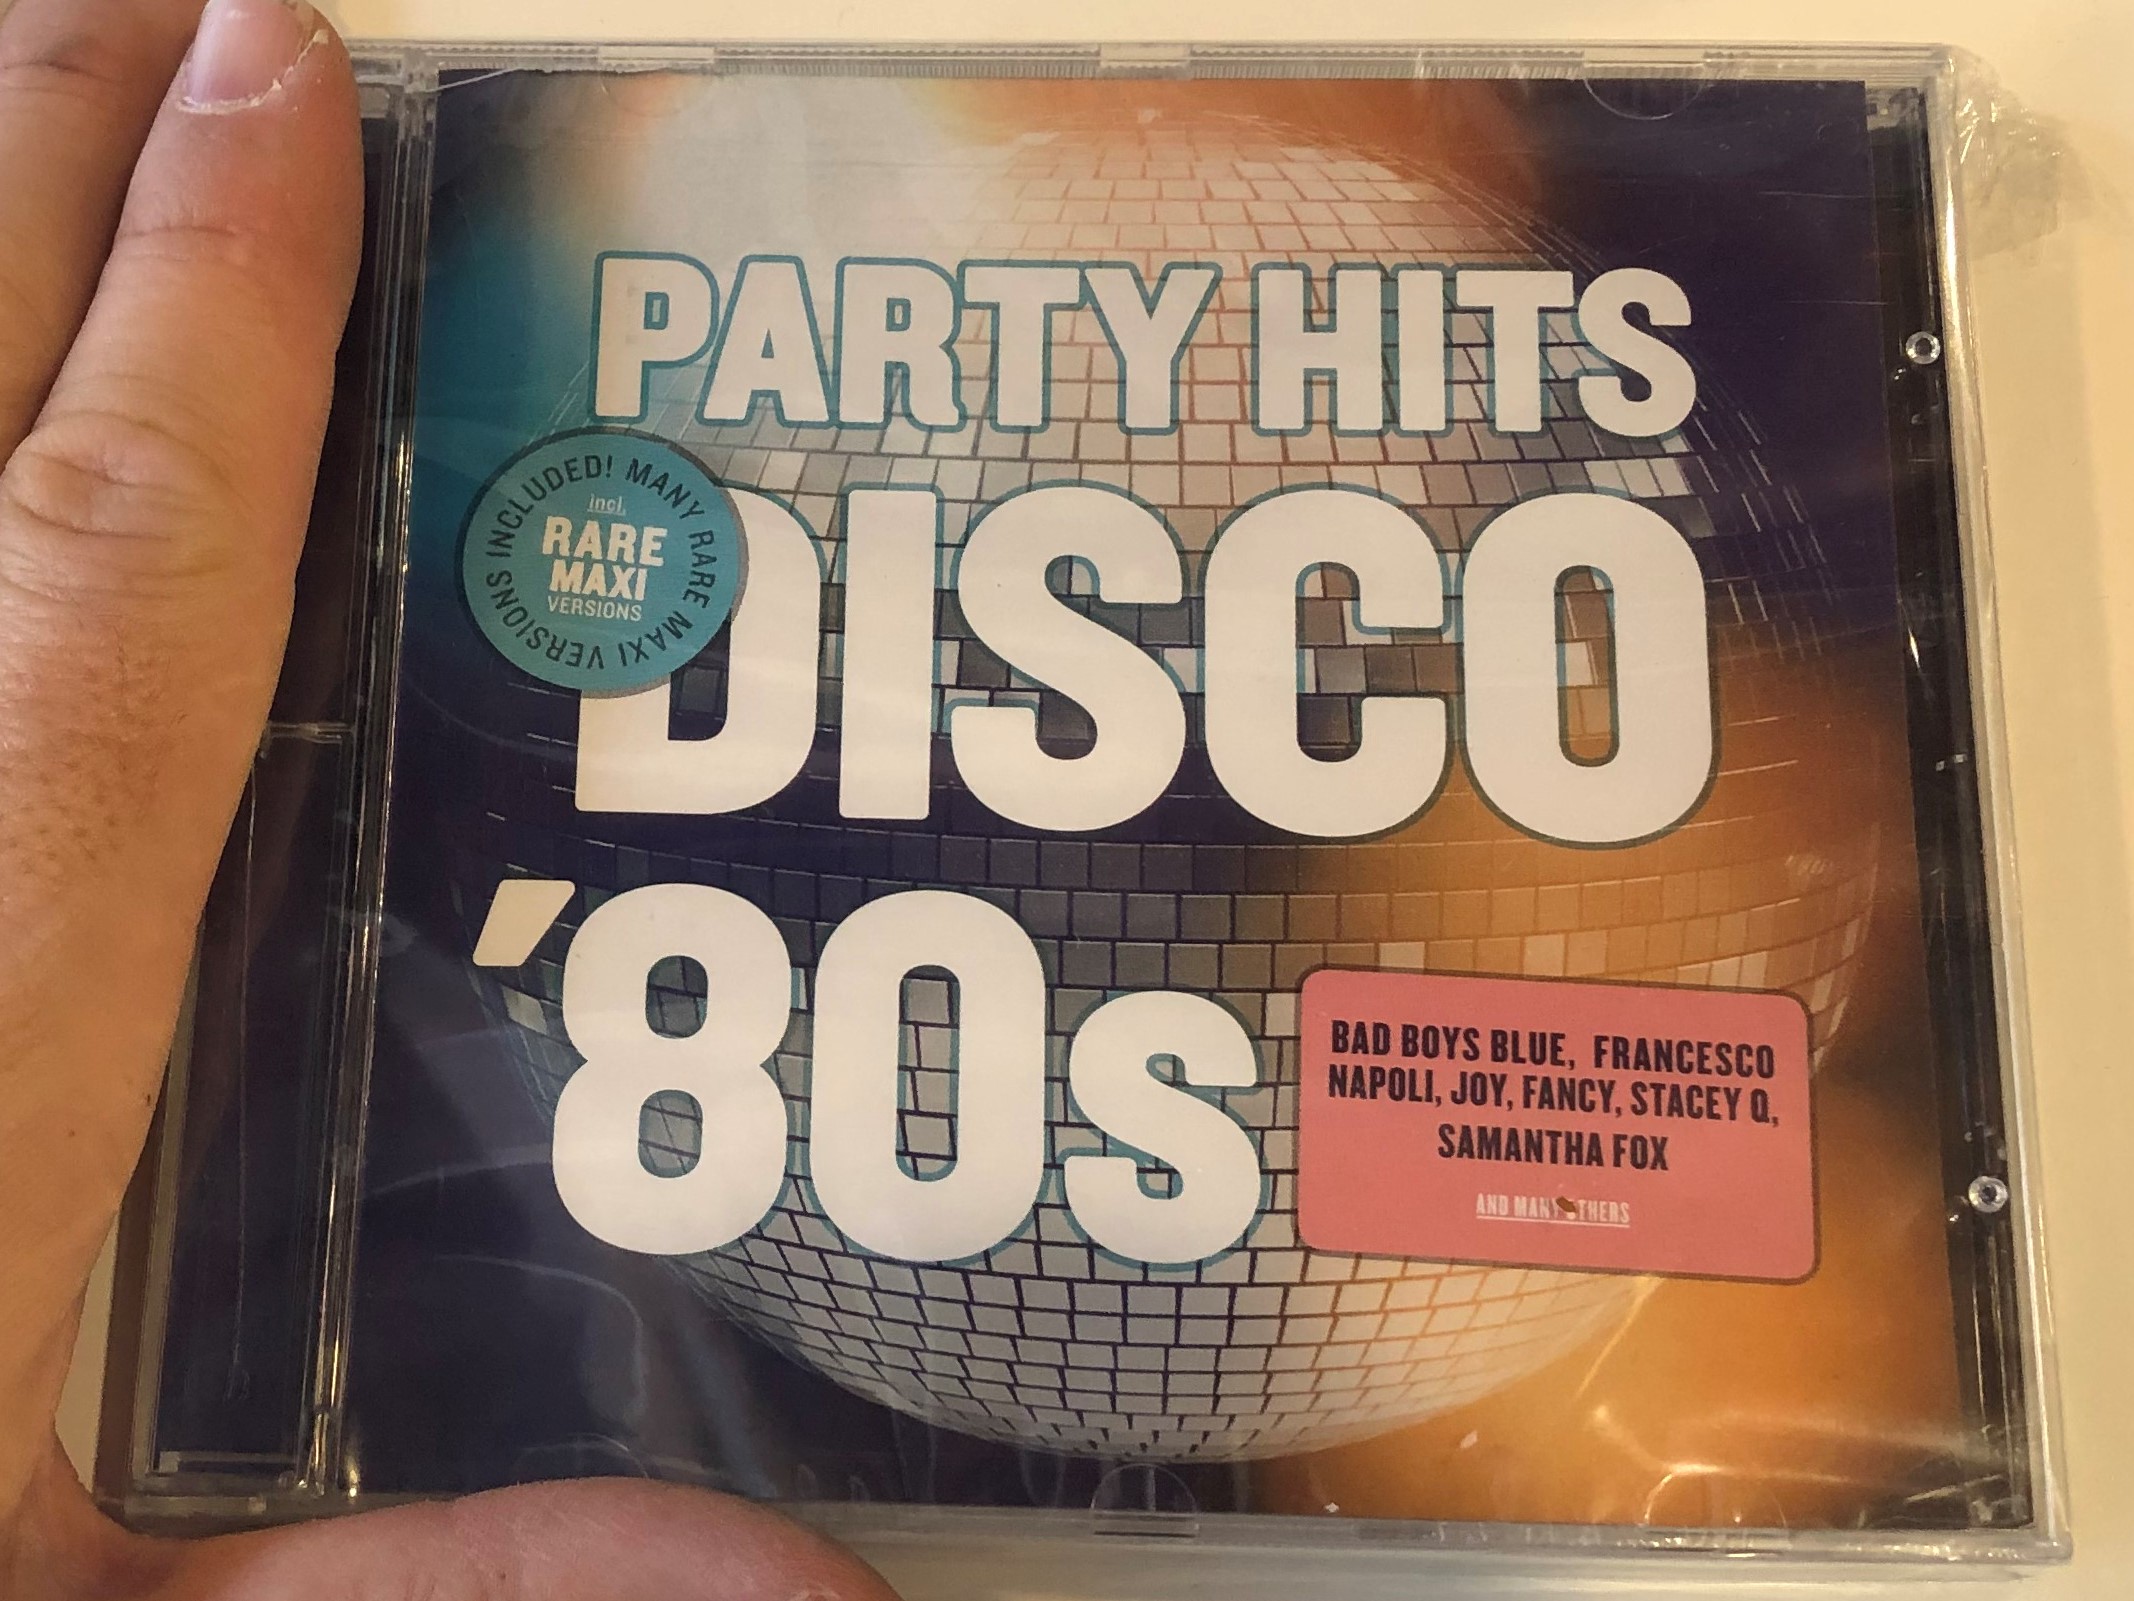 party-hits-disco-80s-bad-boys-blue-francesco-napoli-joy-fancy-stacey-q-samantha-fox-and-many-others-neway-studios-audio-cd-2013-1302-1-.jpg